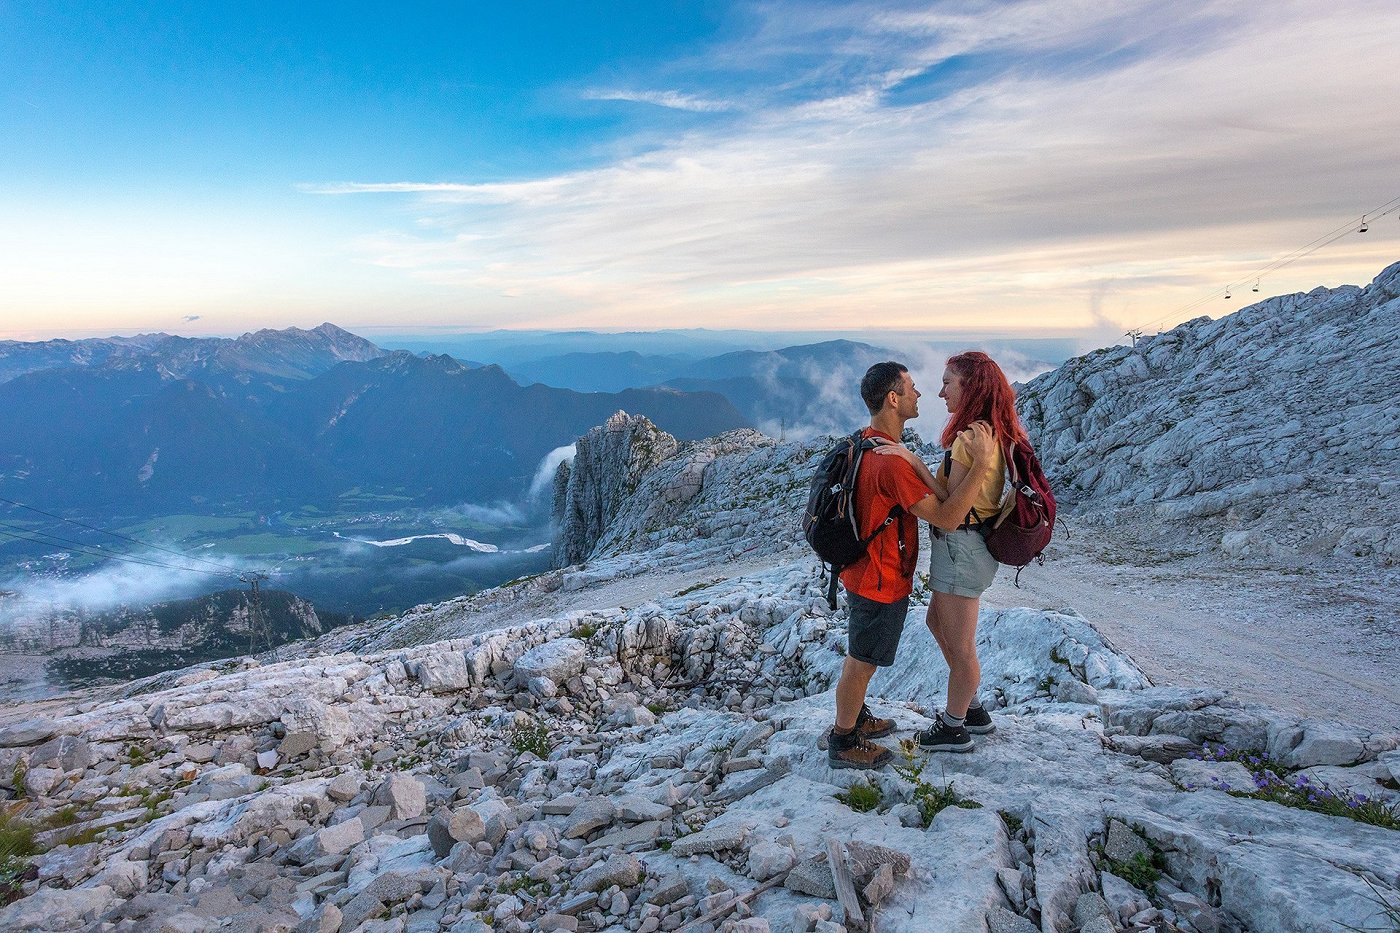 The couple romantically enjoys on Kanin mountain at sunset overlooking the valley